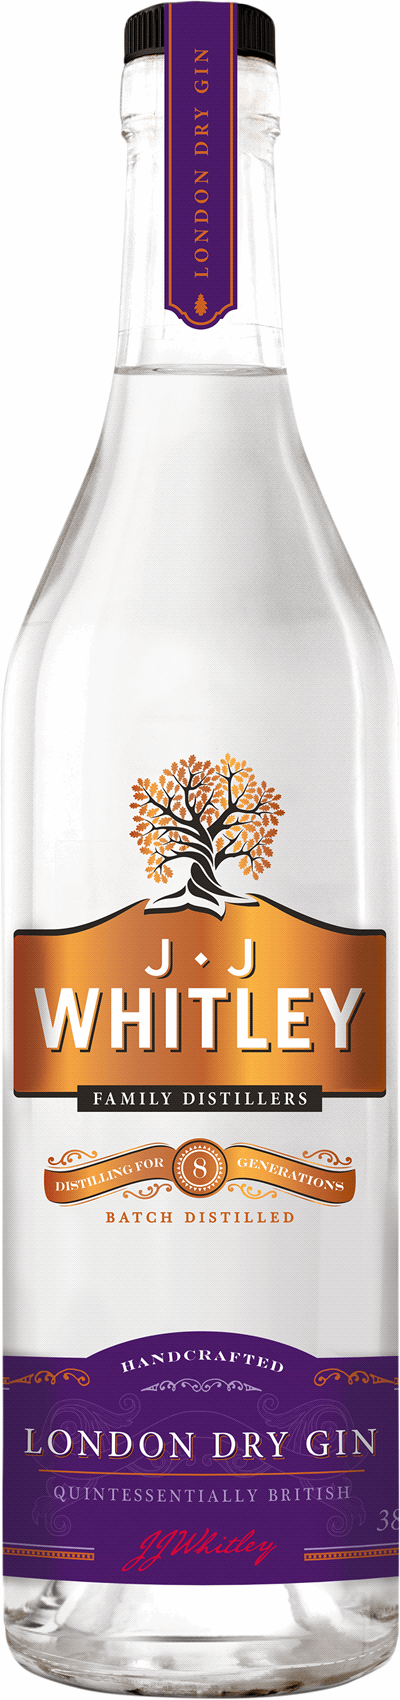 J J Whitley London dry gin